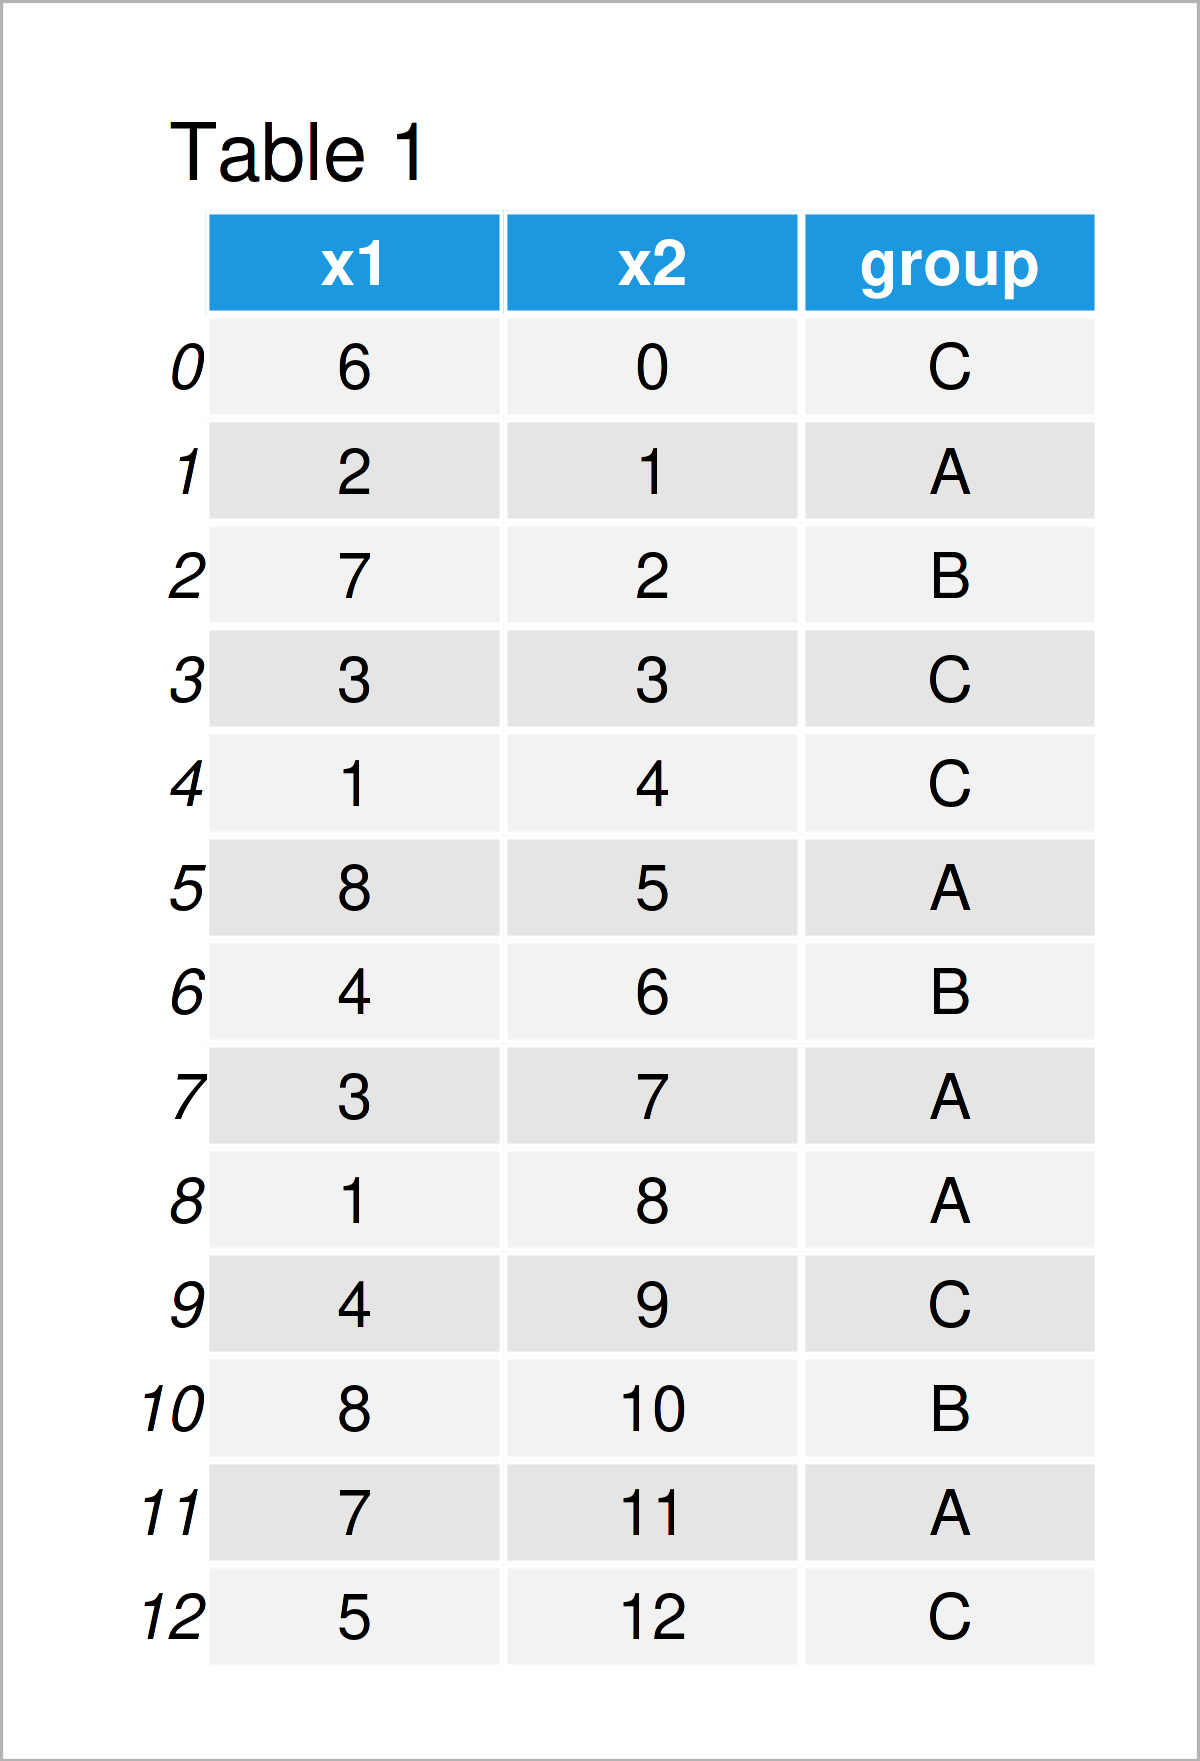 table 1 DataFrame percentile decile python programming language